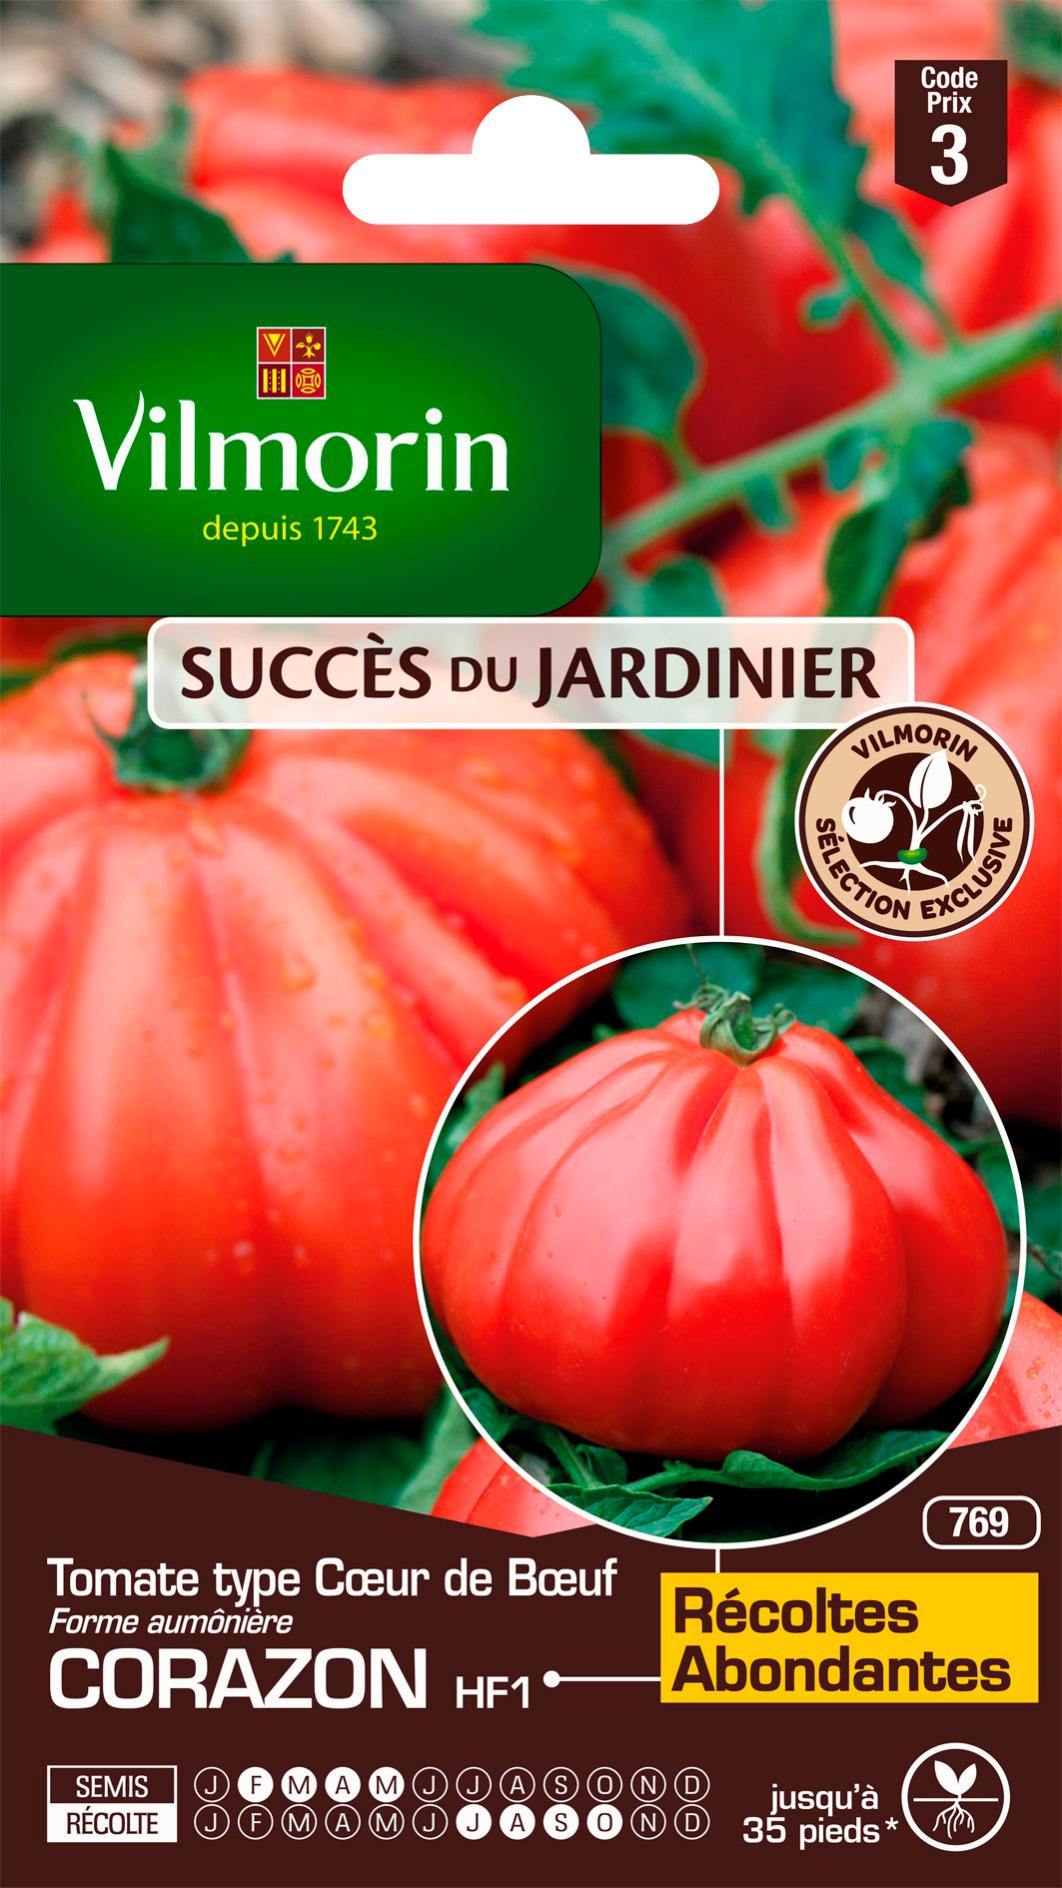 Tomate coeur de boeuf VILMORIN 0.2 g